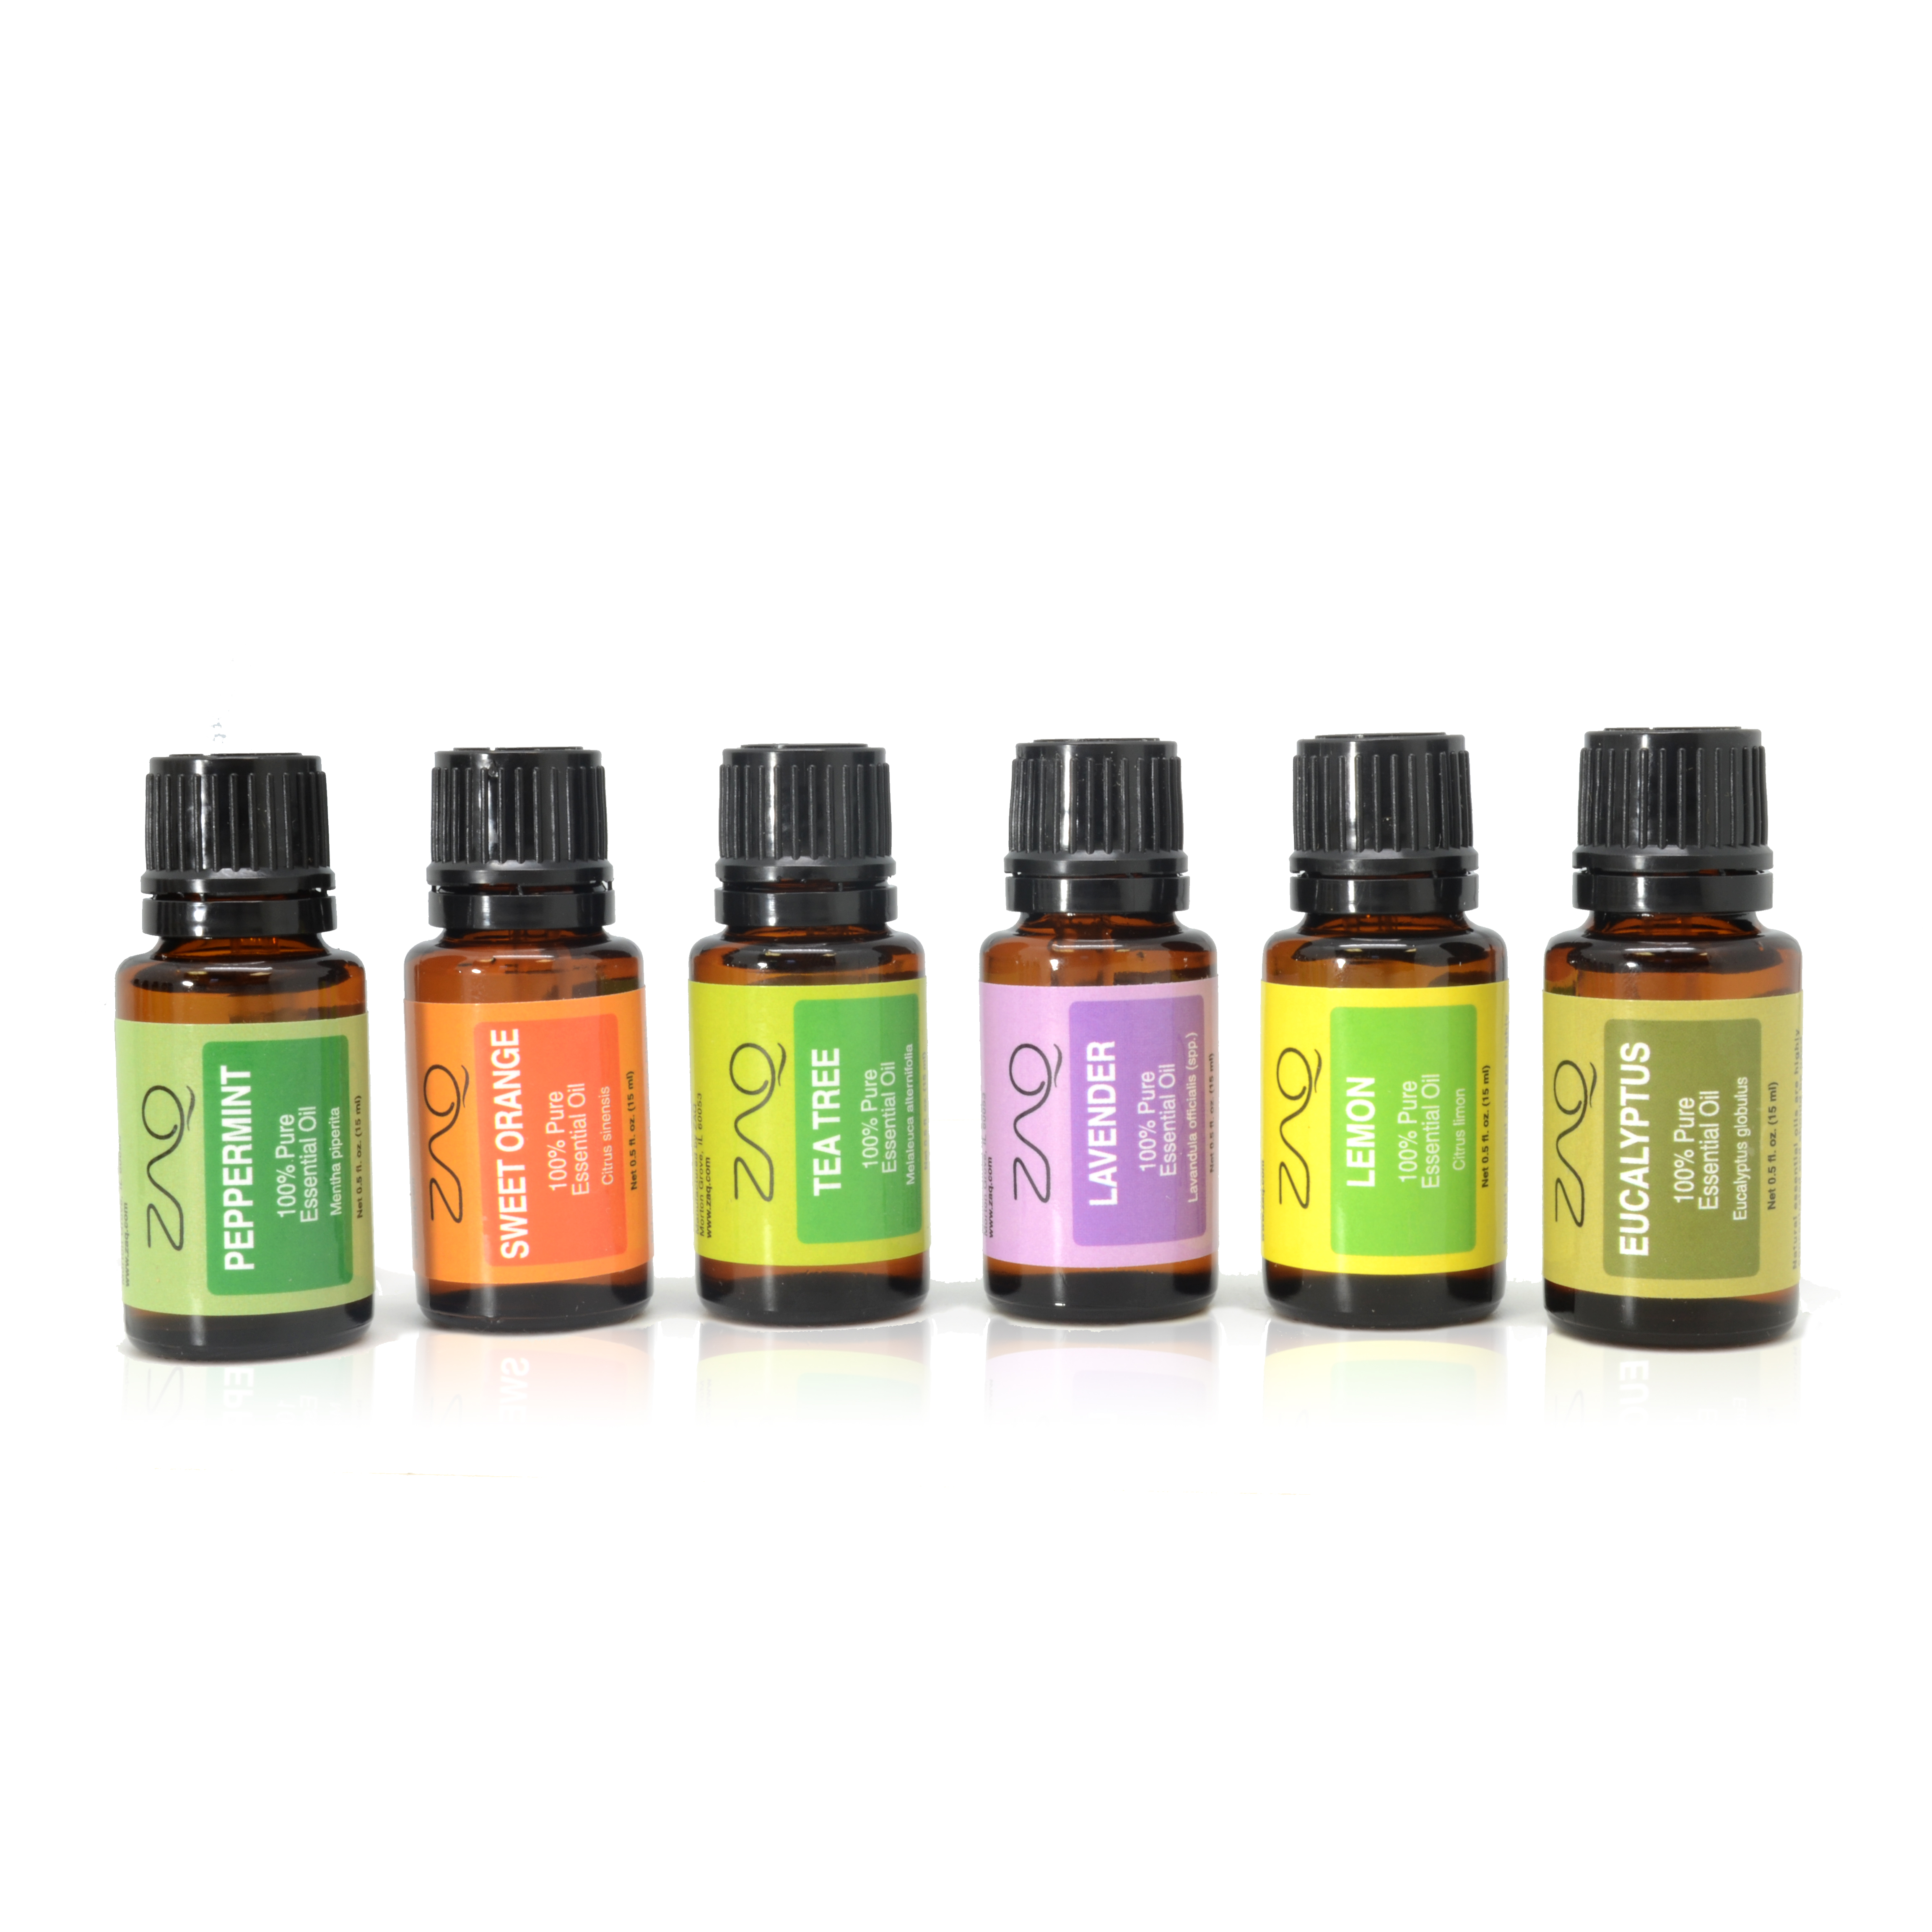 ZAQ Aromatherapy Essential Oil Gift Set